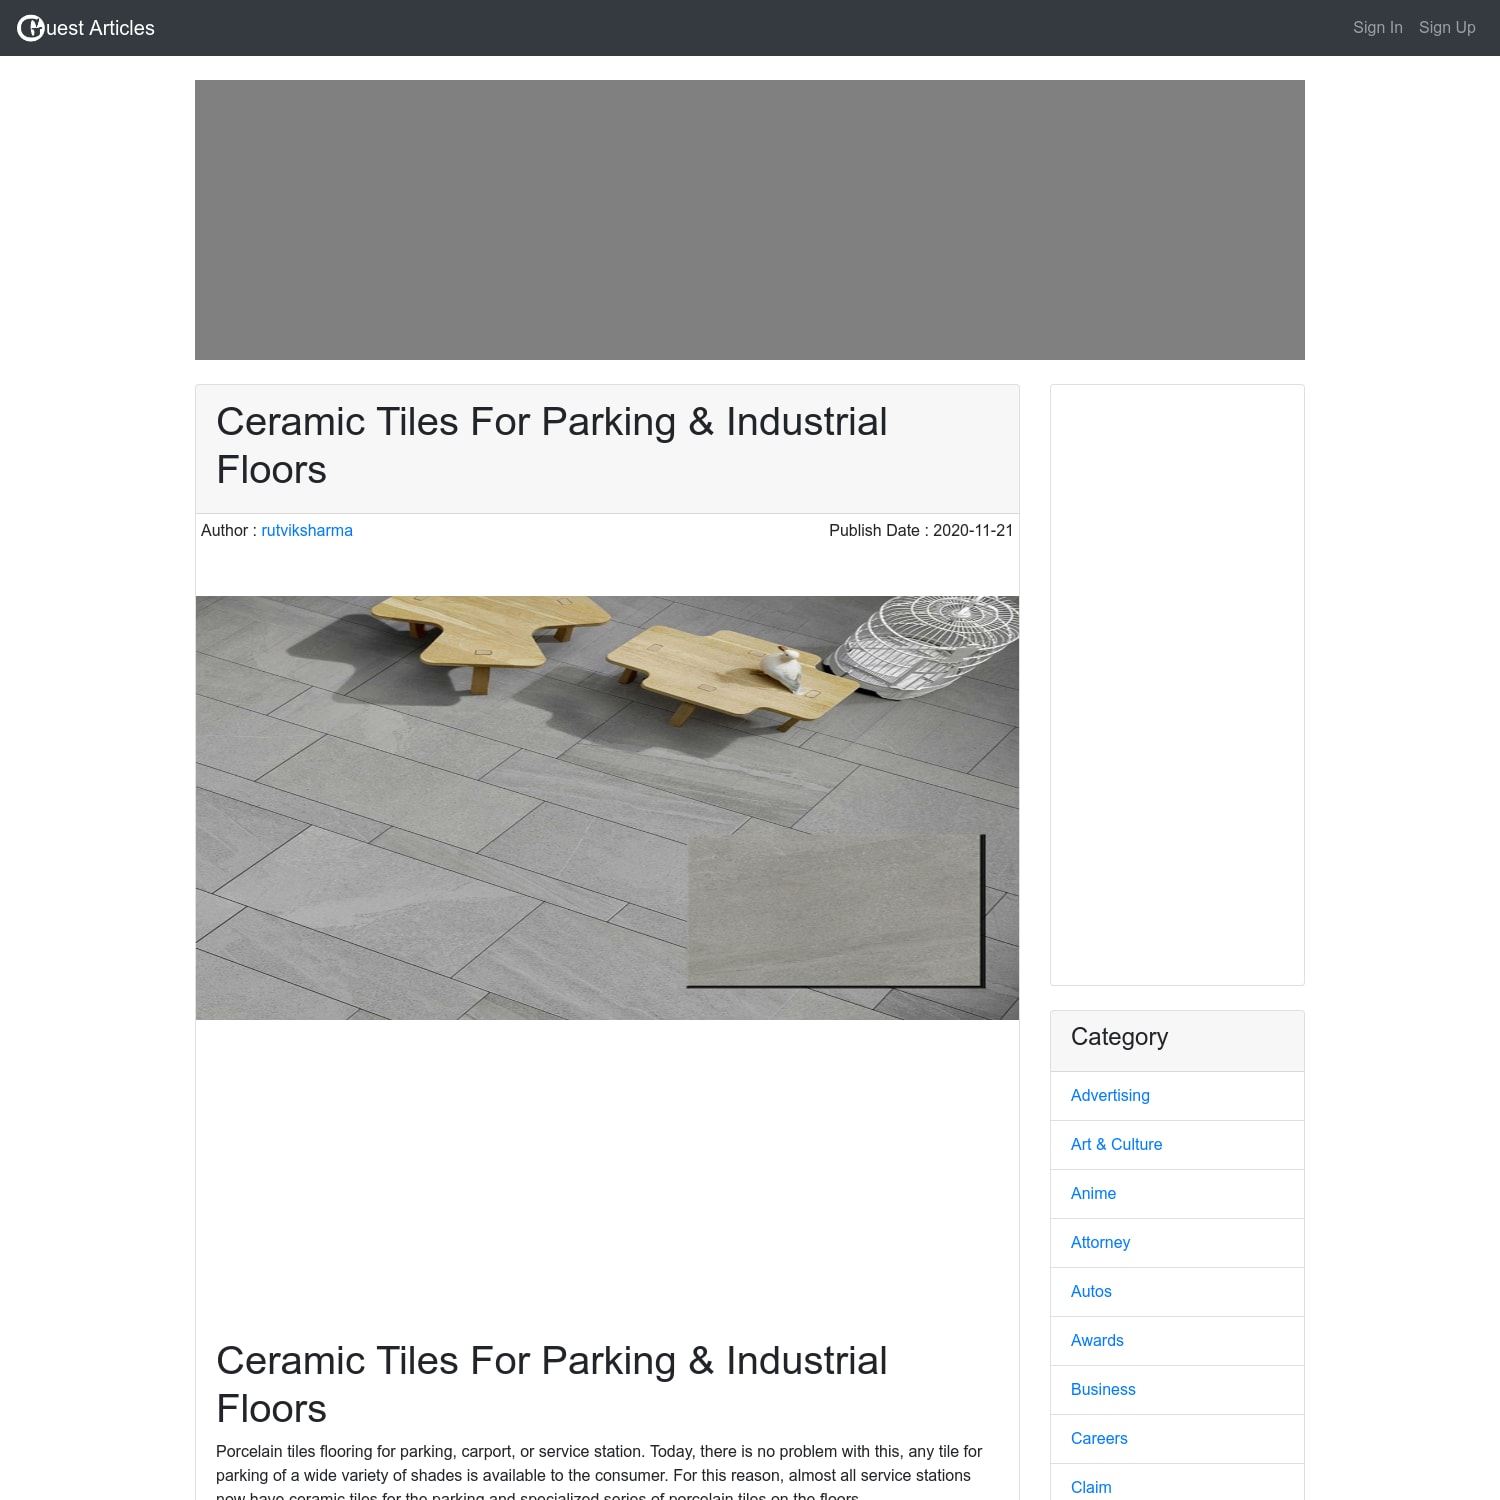 Ceramic Tiles For Parking & Industrial Floors